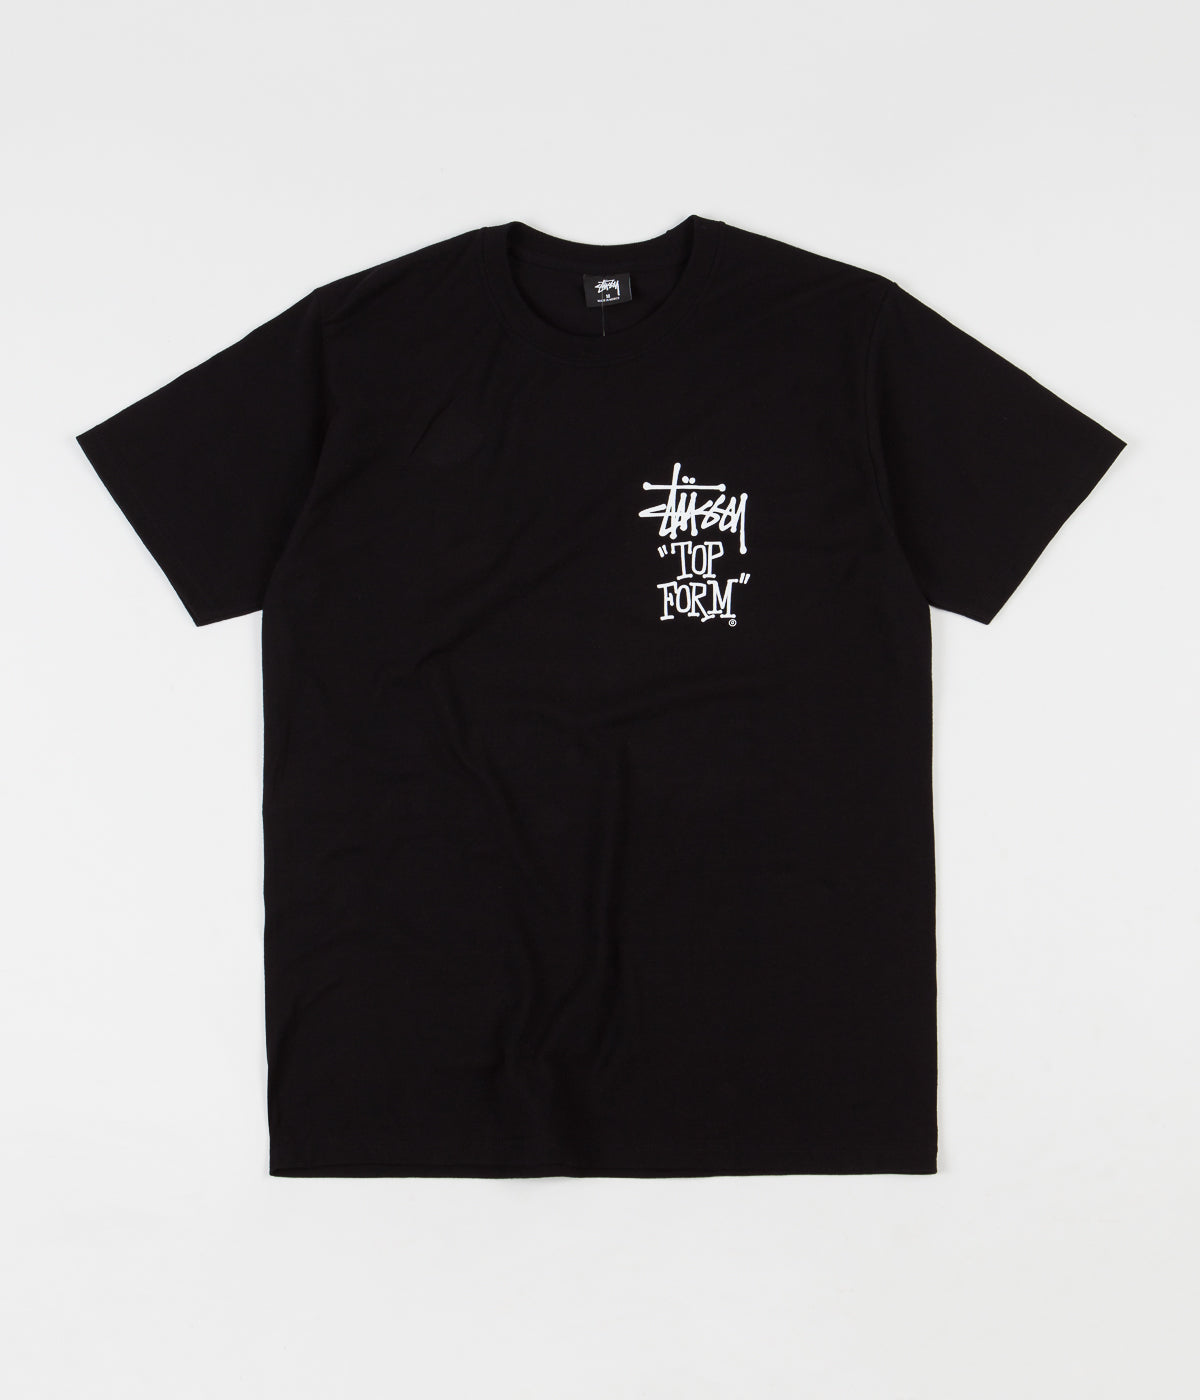 Stussy Top Form T-Shirt - Black | Flatspot